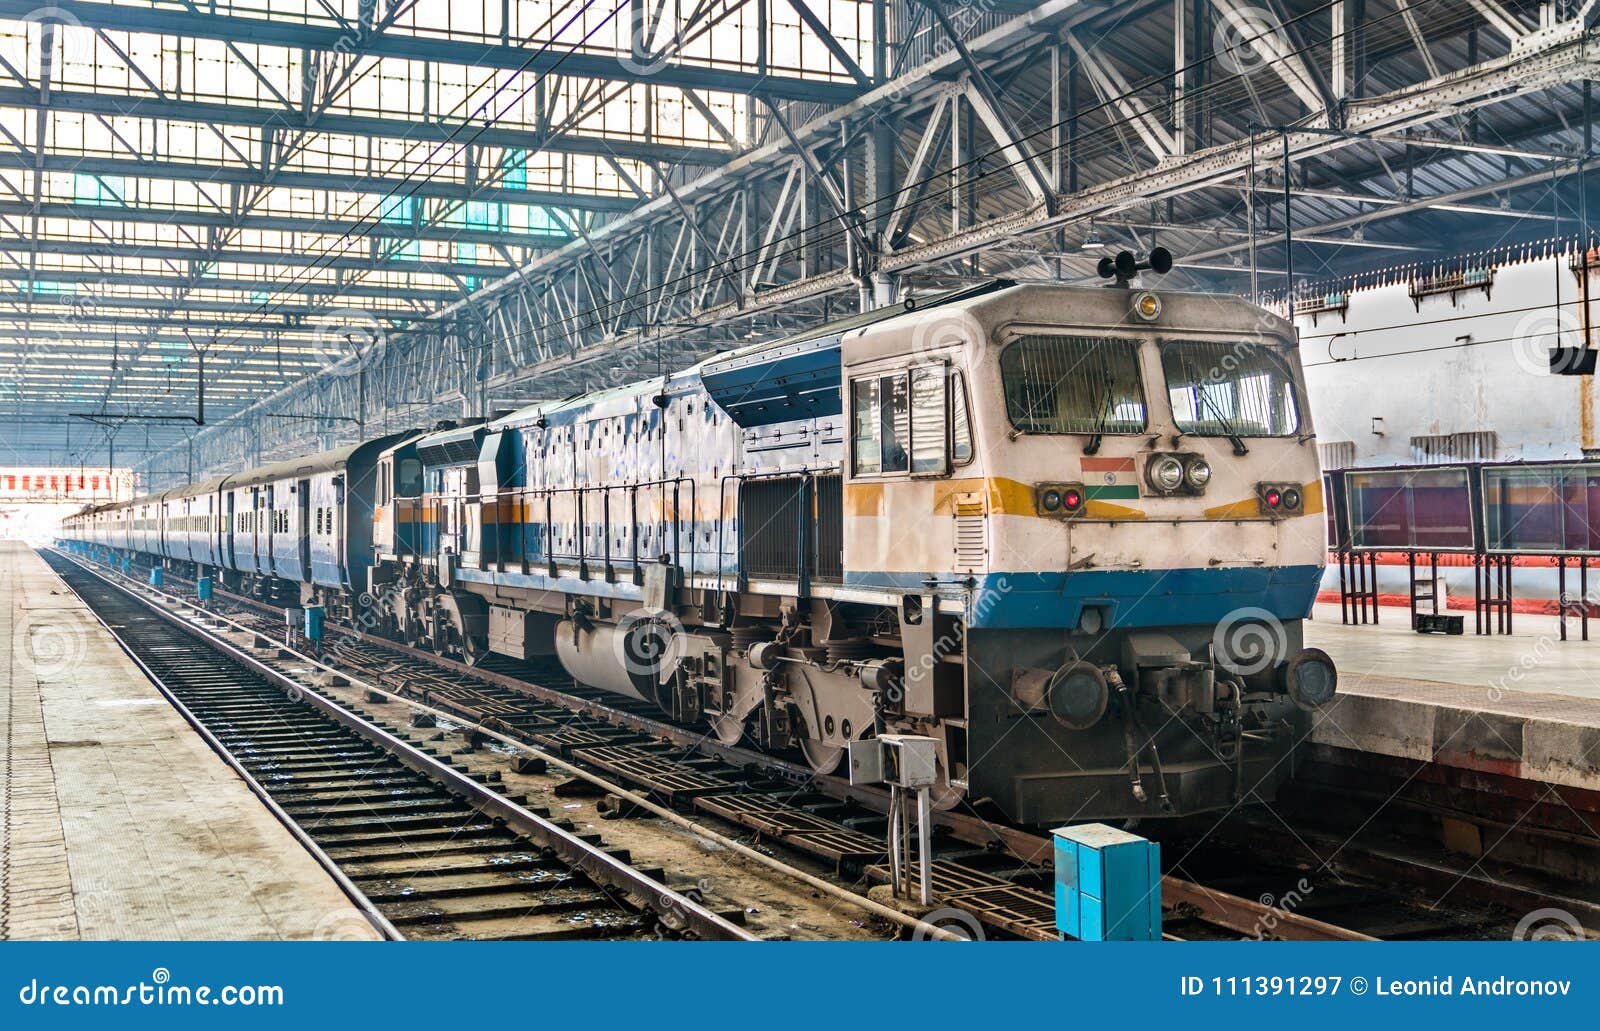 passenger train at chhatrapati shivaji maharaj terminus in mumbai